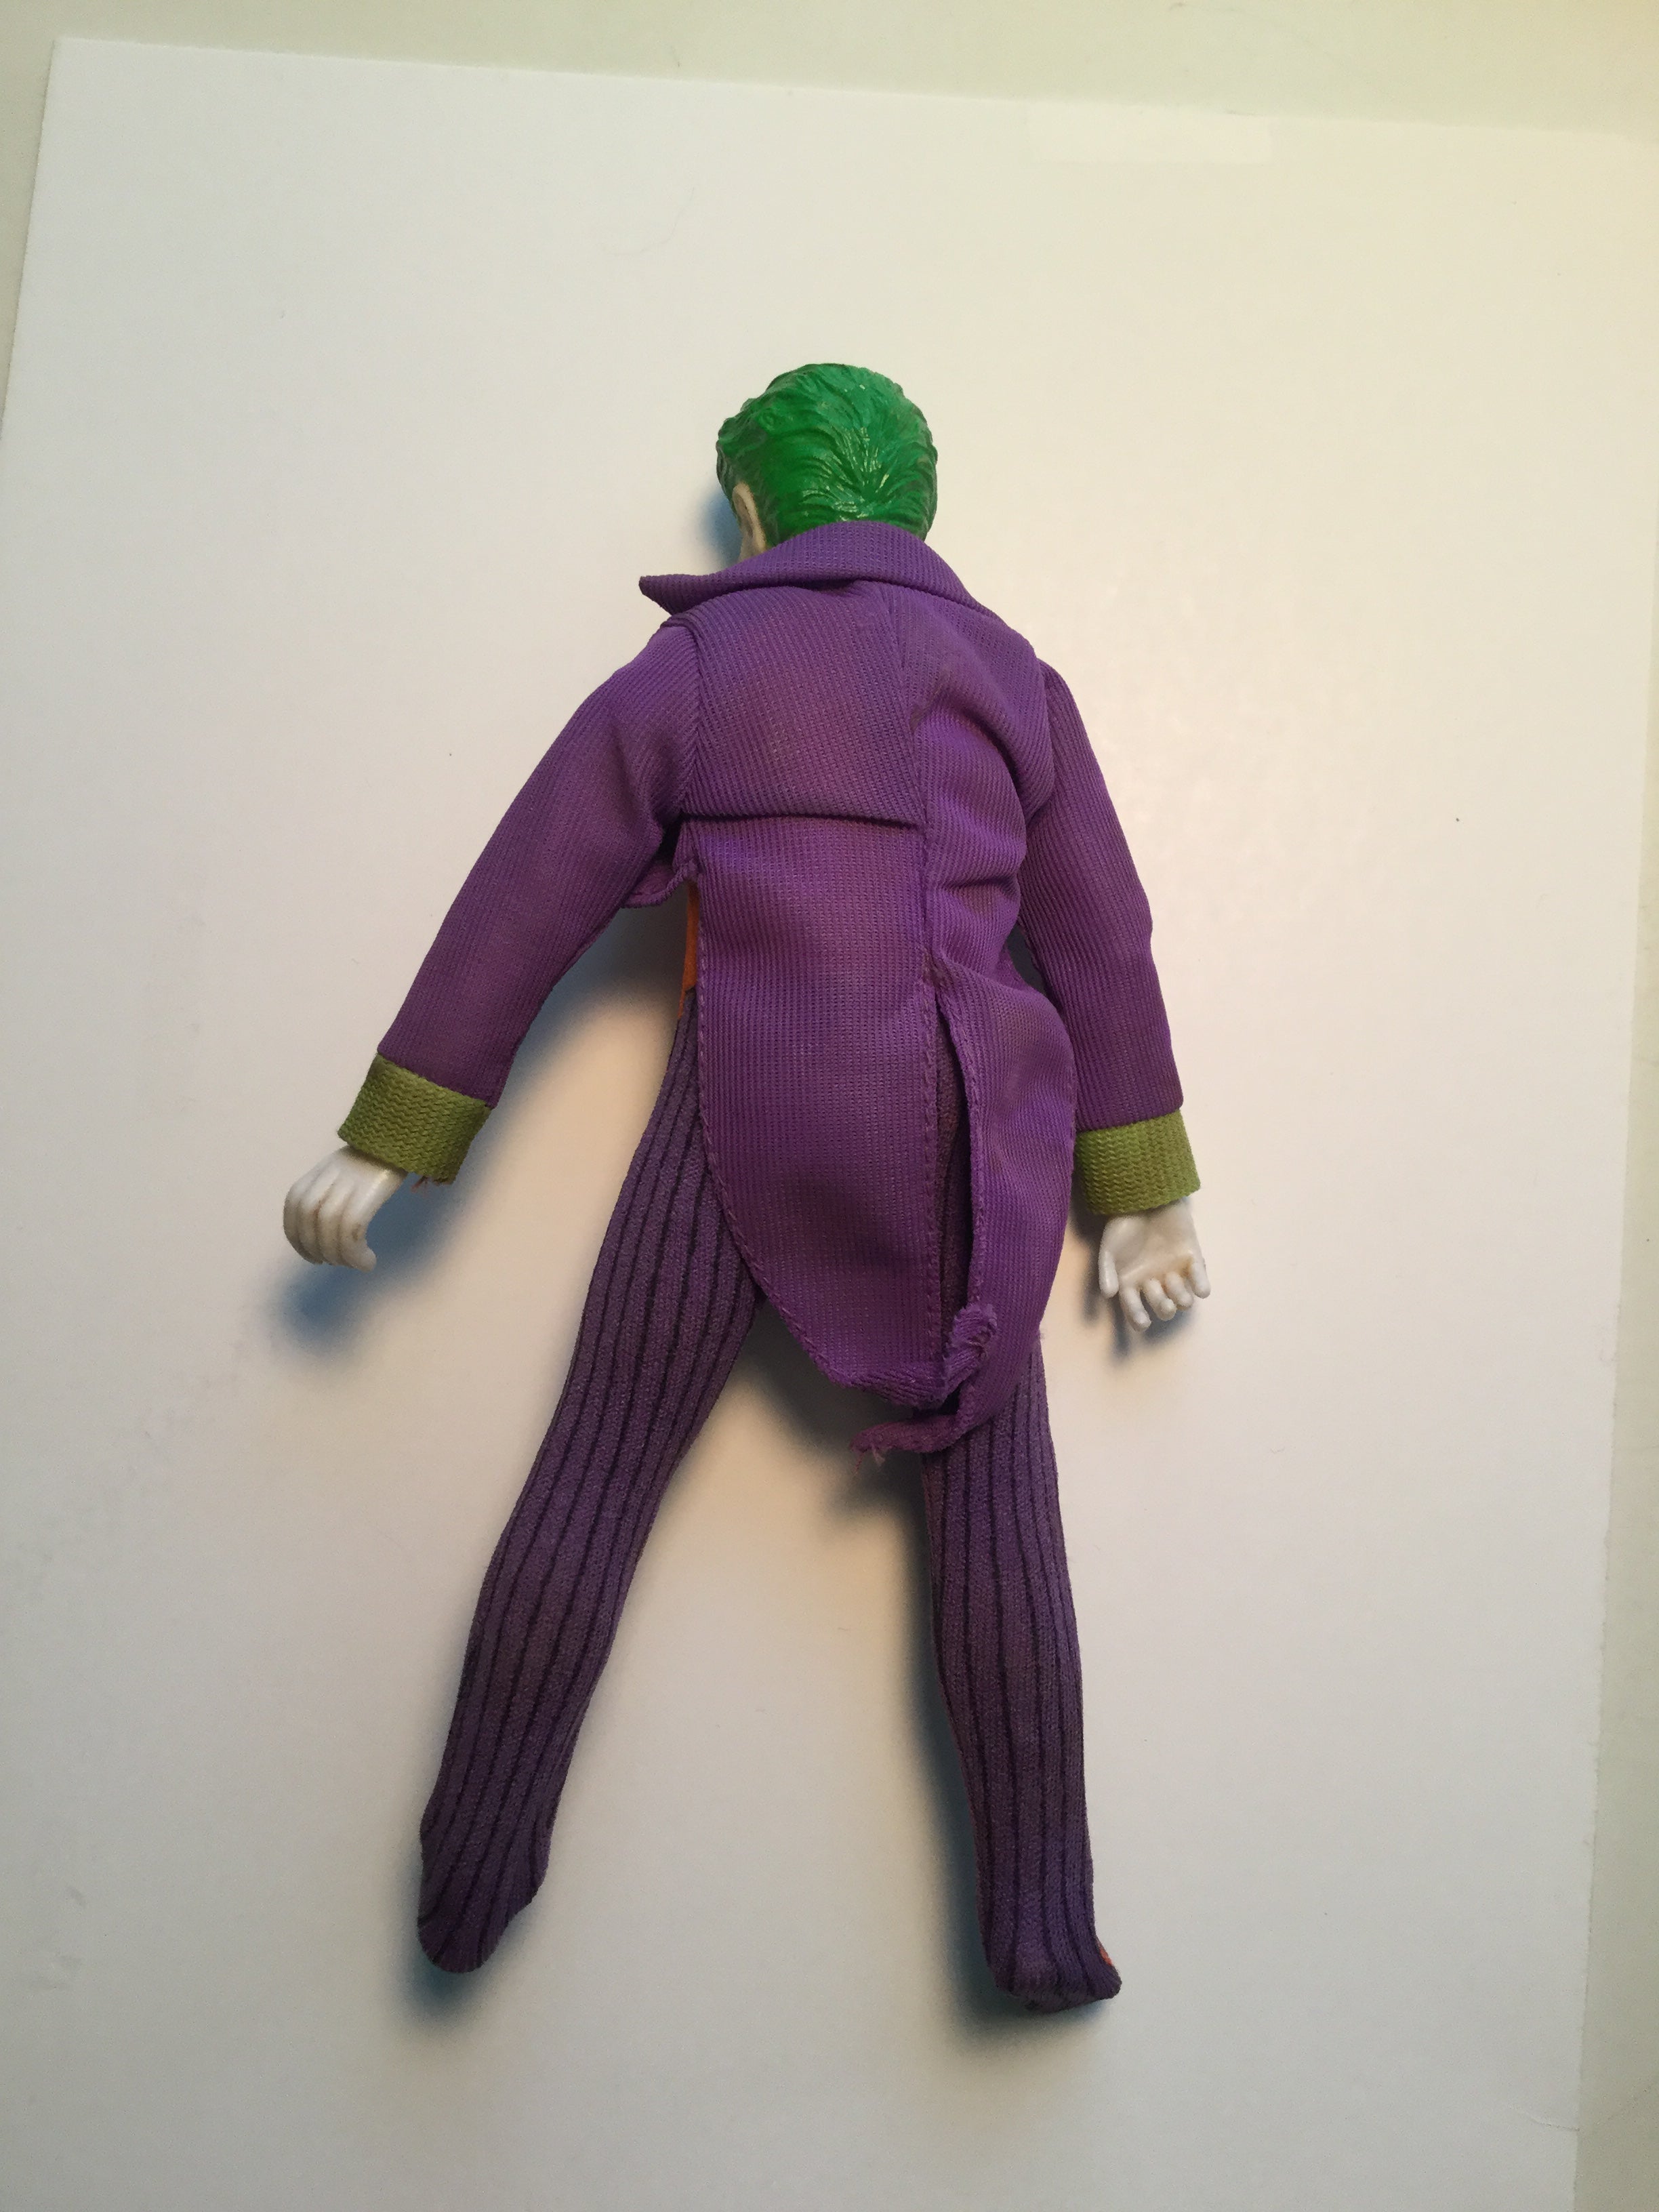 Batman Joker Rare Mego Original doll 1970s